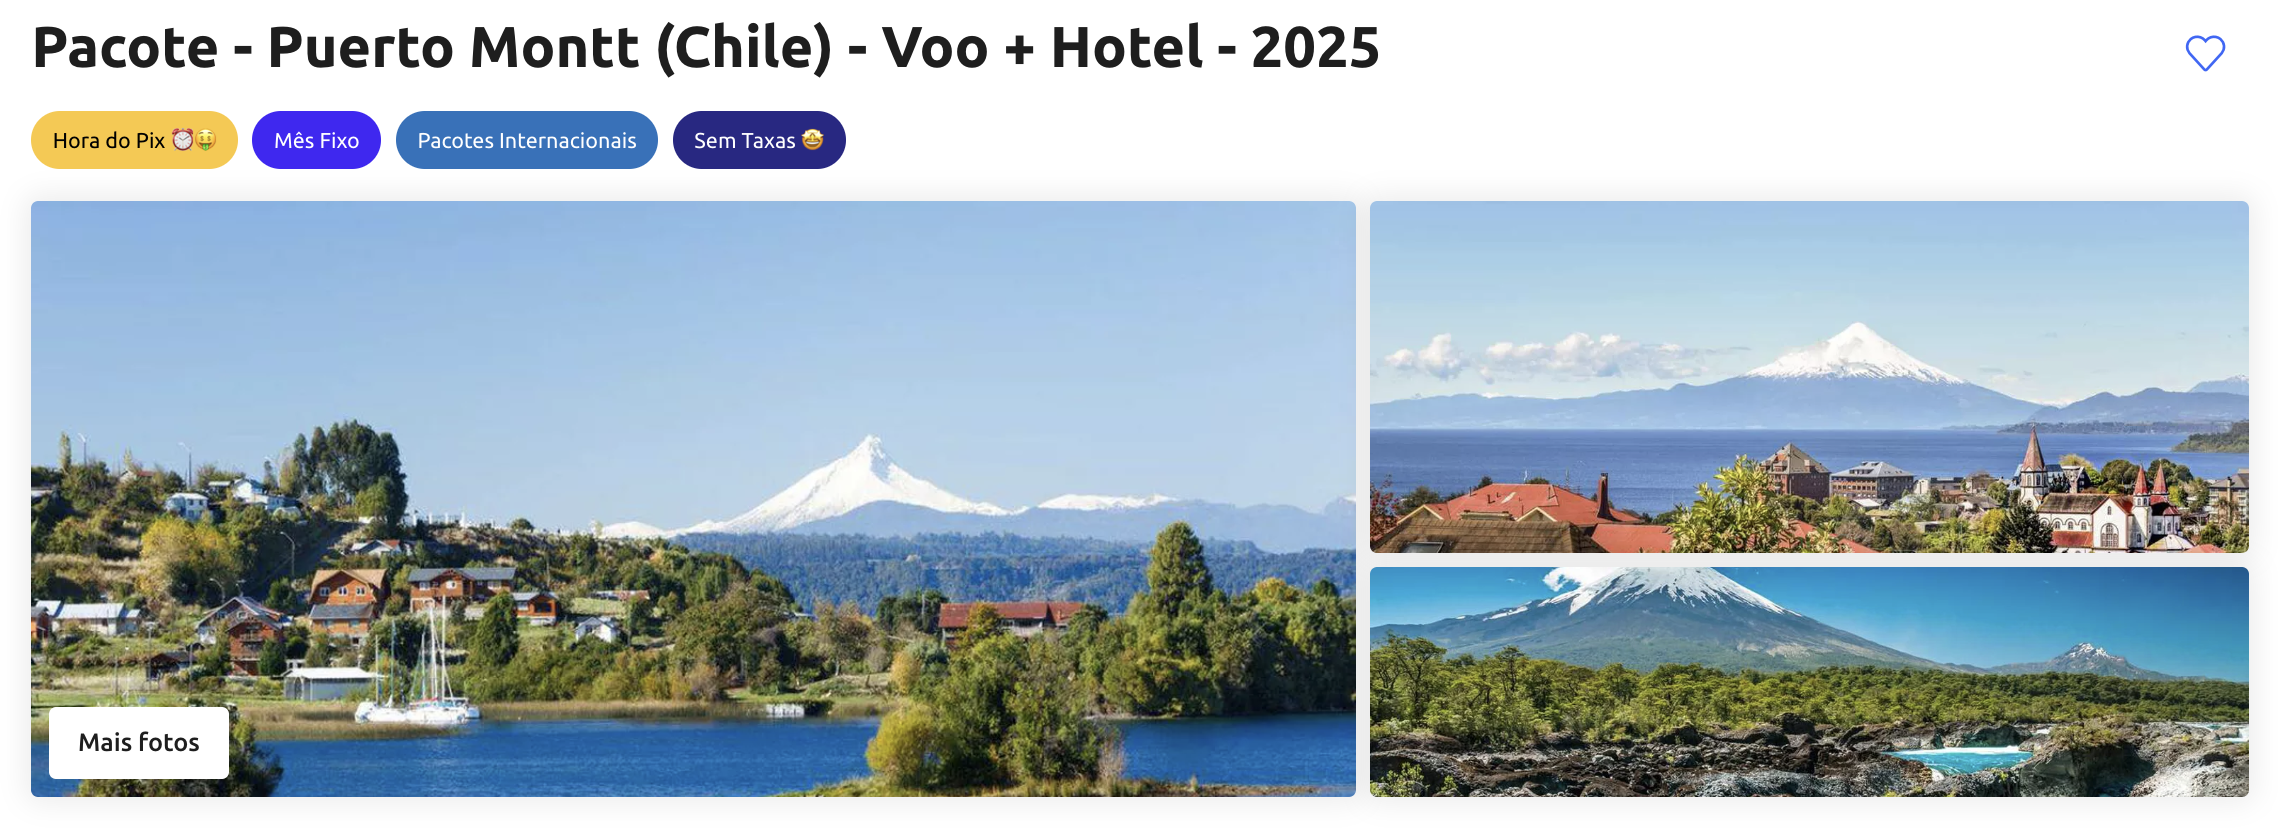 Pacote - Puerto Montt (Chile) - Voo + Hotel - 2025